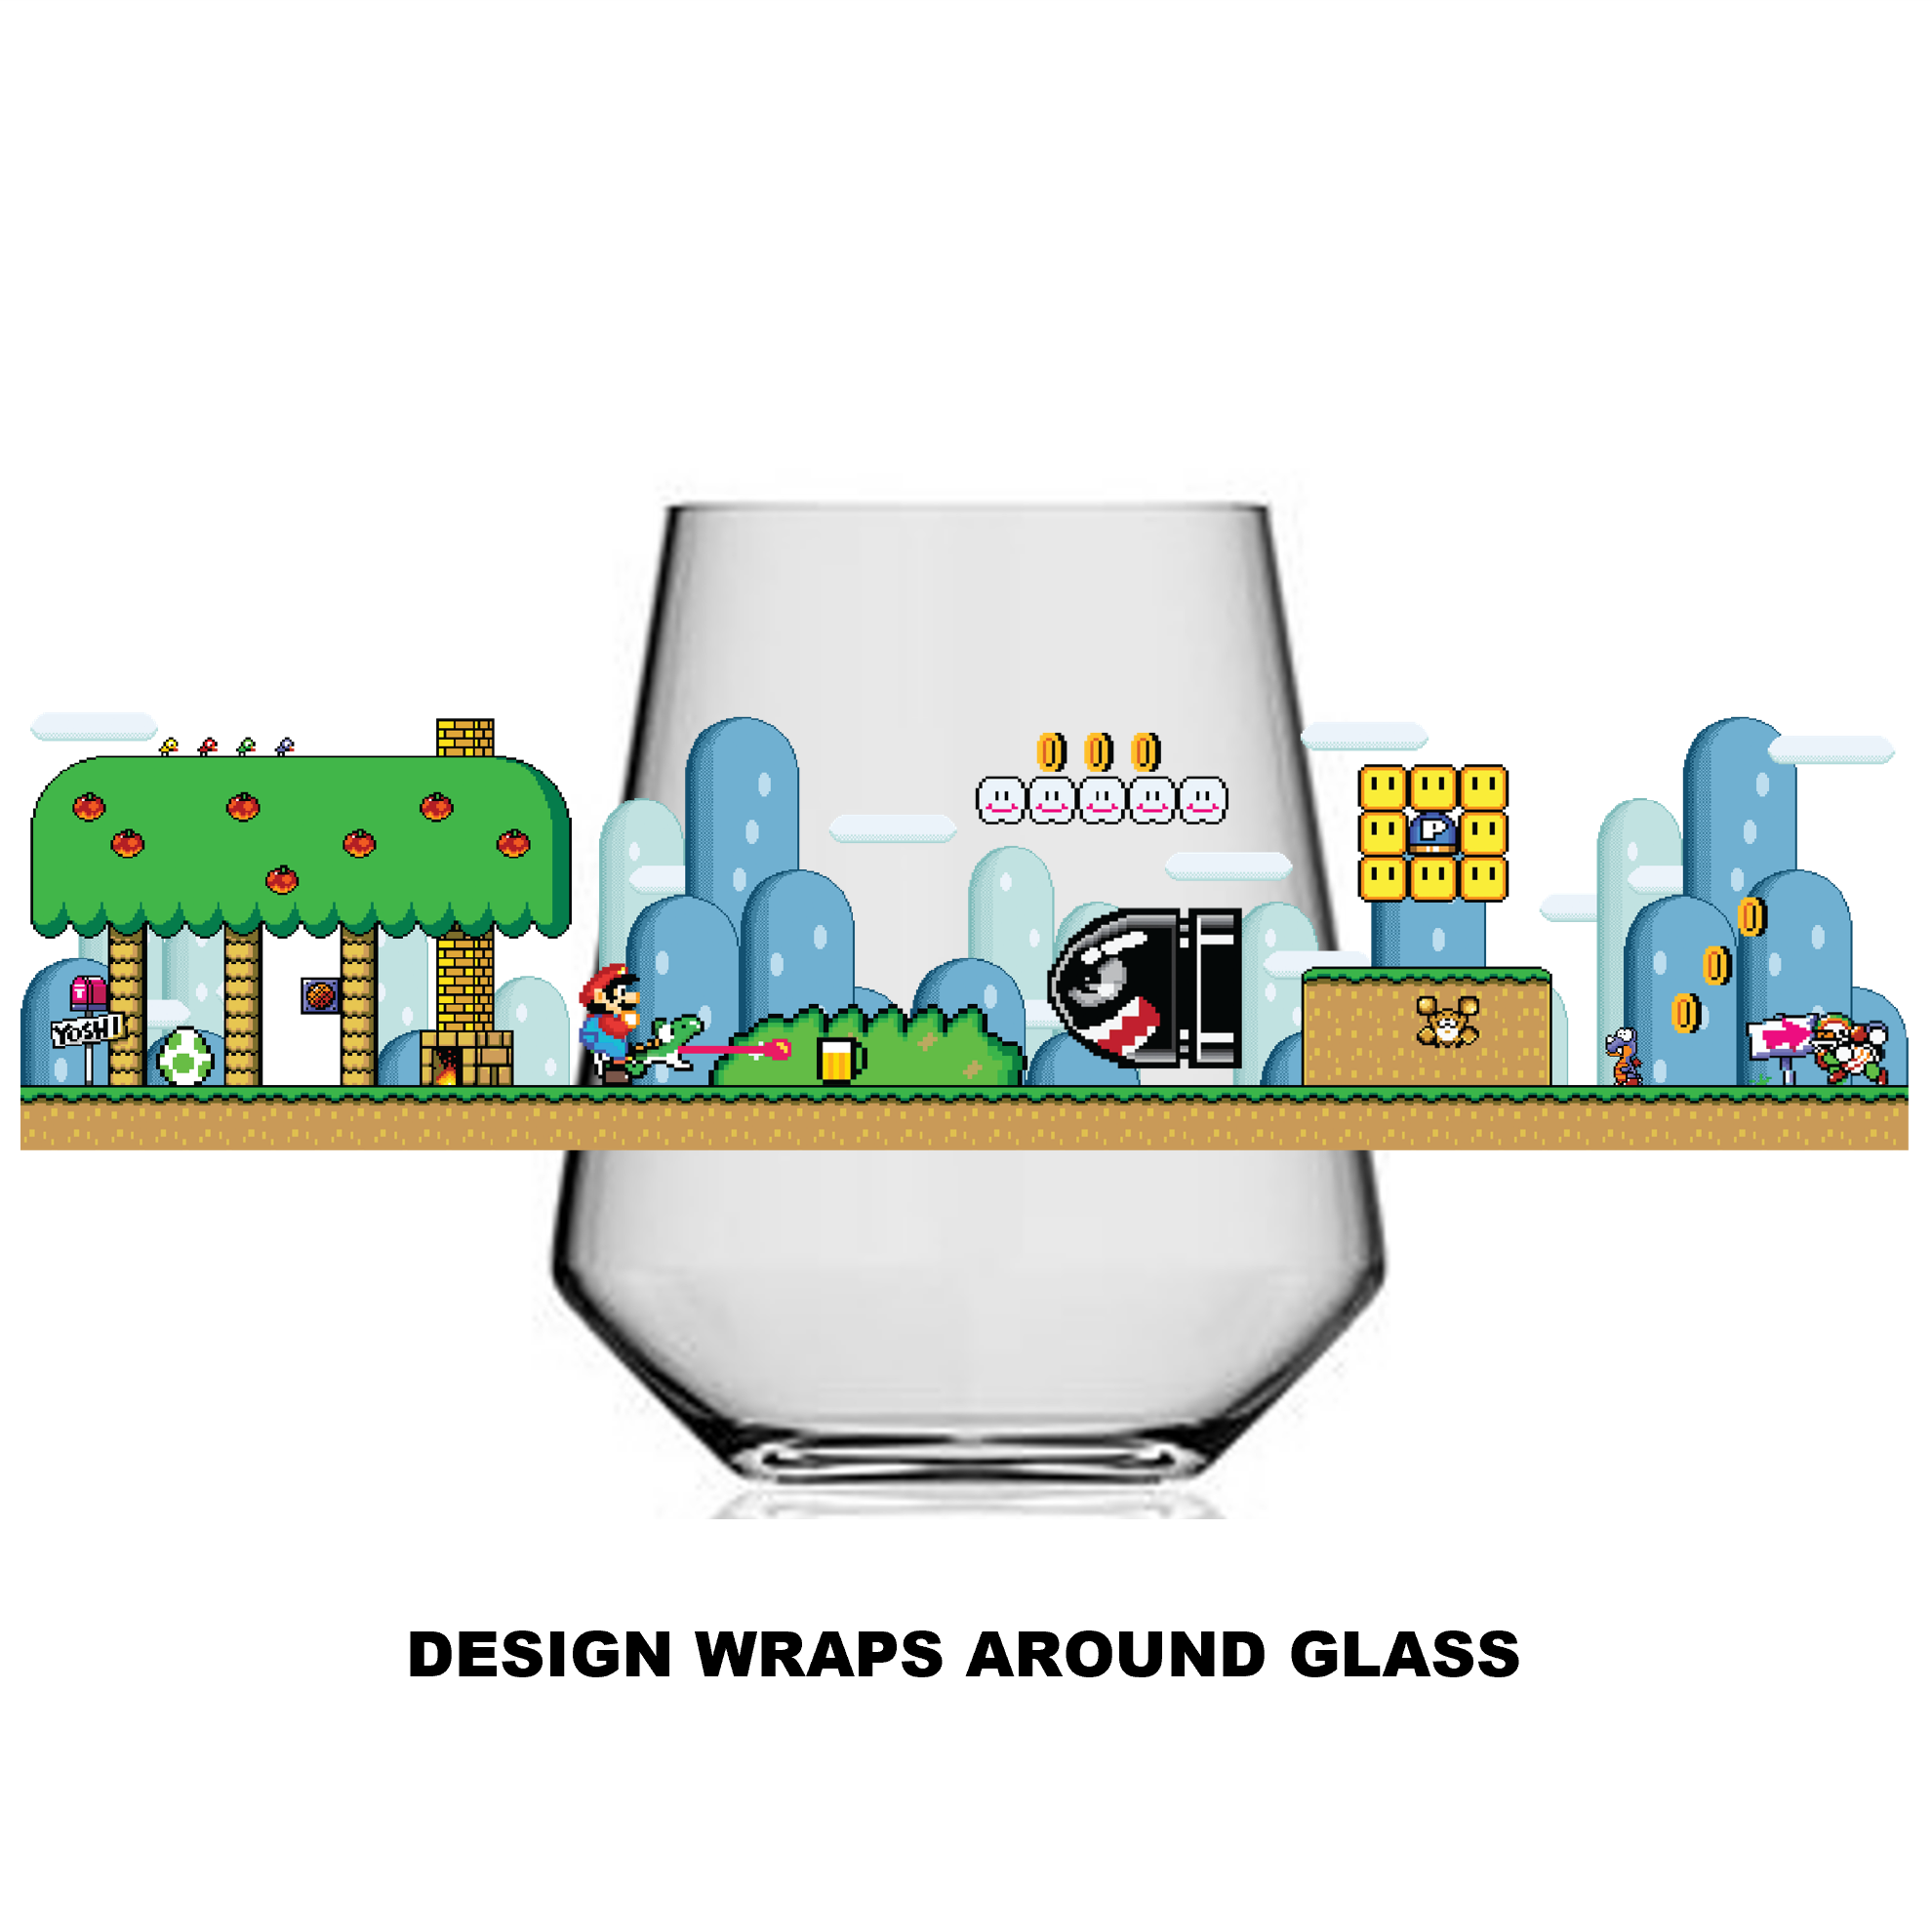 Single Product Image “Yoshi's Beer Battle” 14oz glass